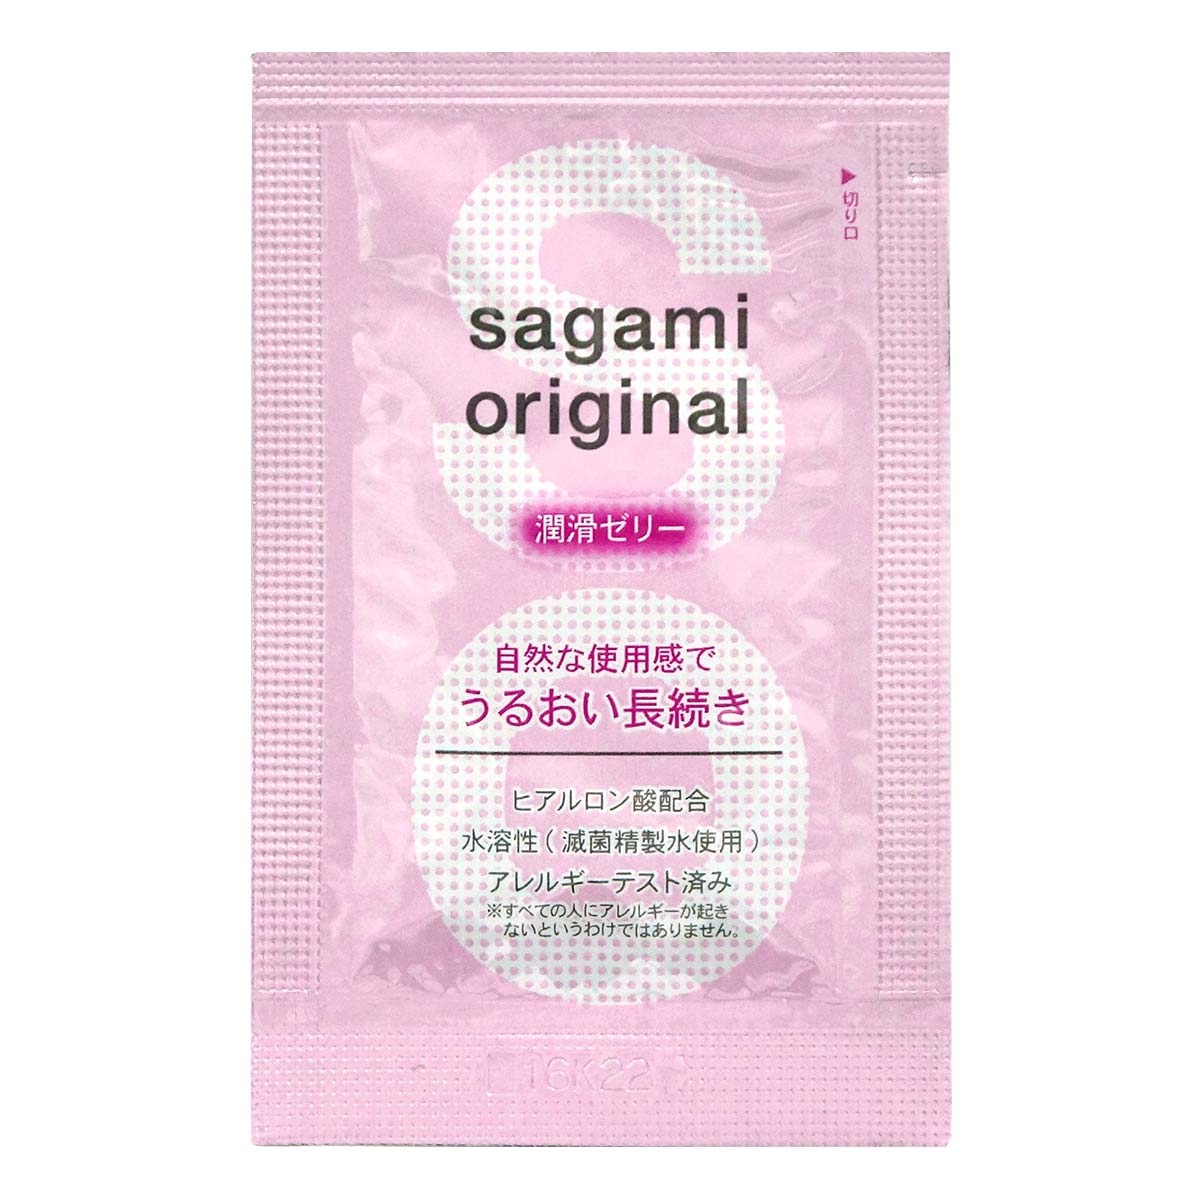 Sagami Original Lubricating Gel 3g (sachet) 1 piece Water-based Lubricant-p_2